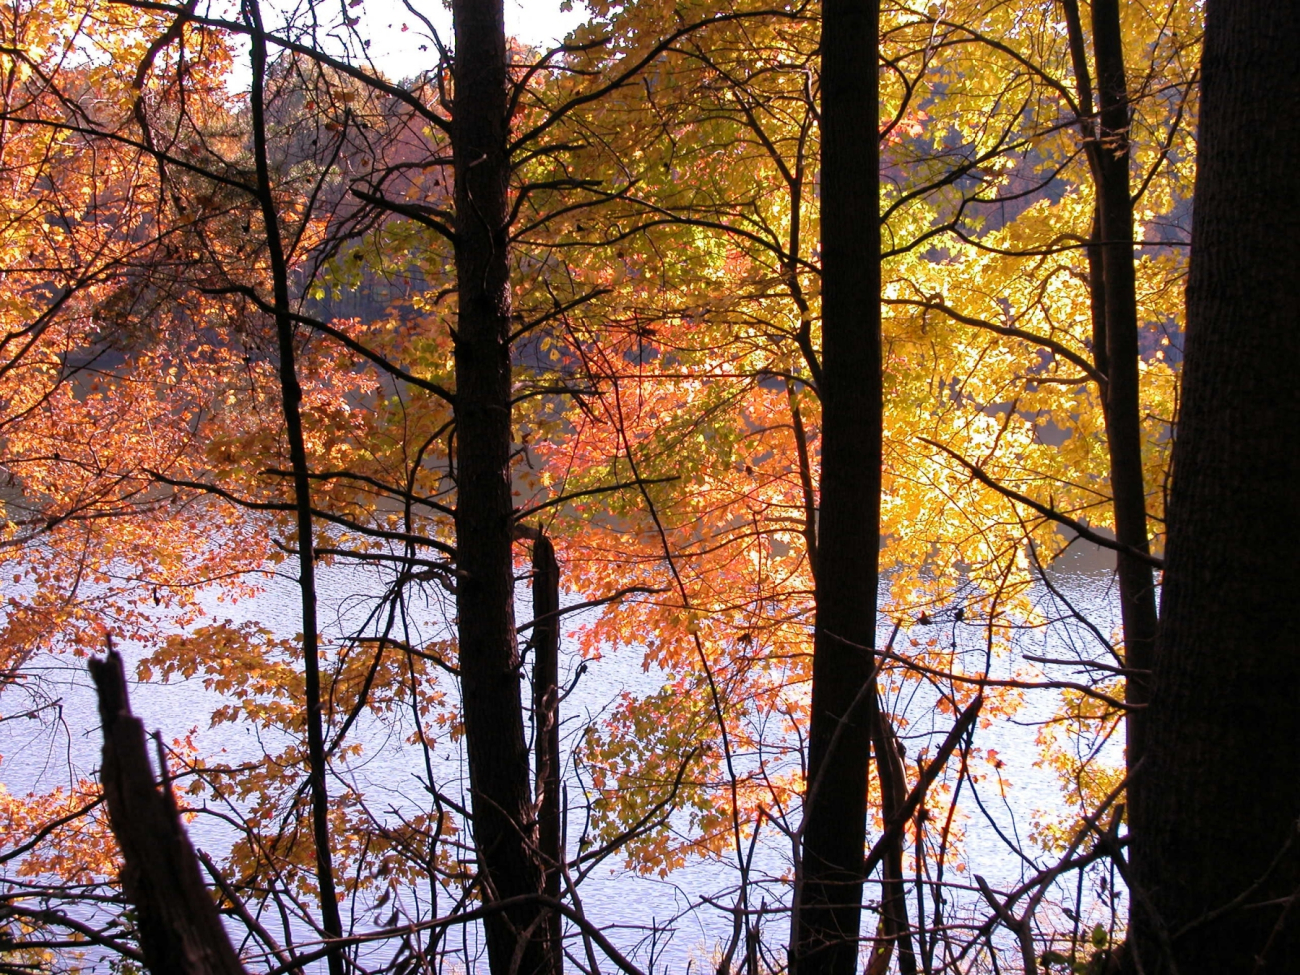 Clopper Lake as seen through autumn colors